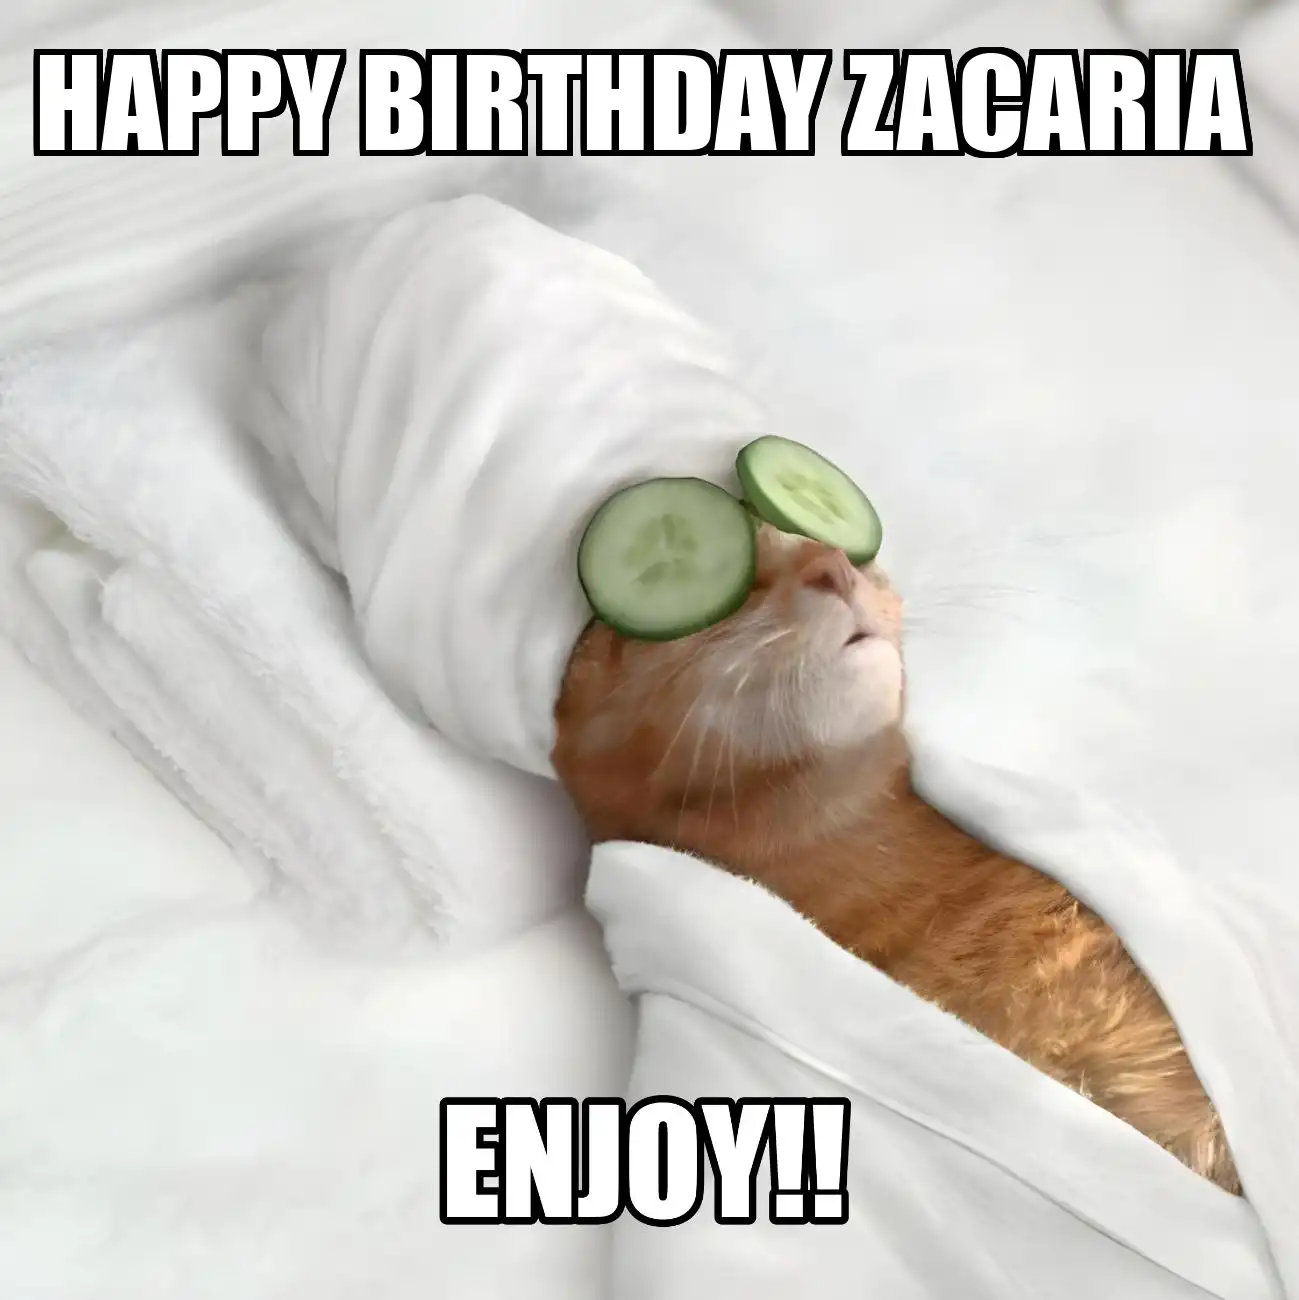 Happy Birthday Zacaria Enjoy Cat Meme